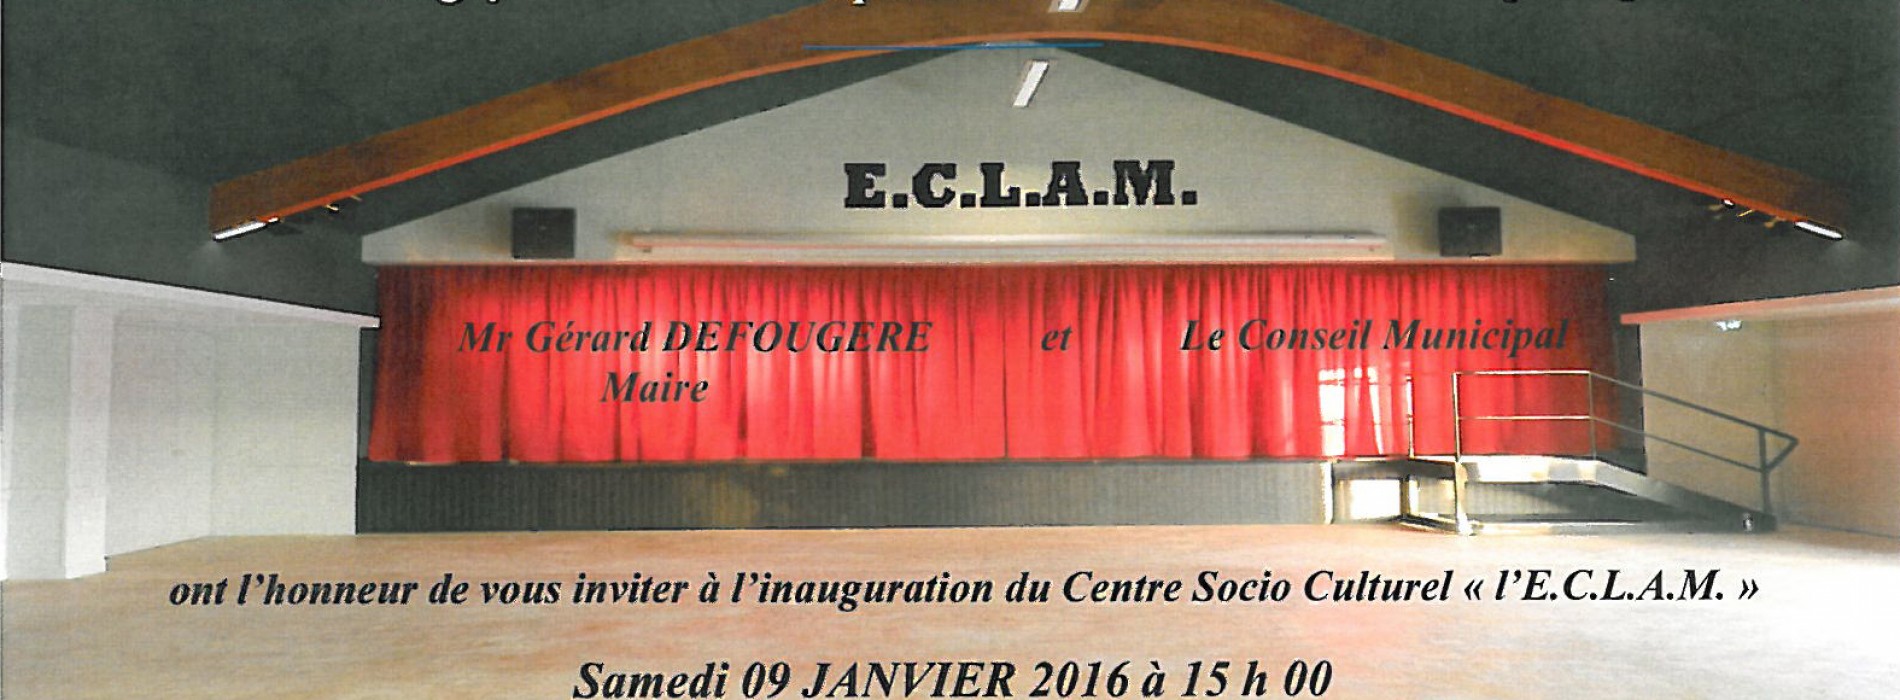 Inauguration du Centre Socio Culturel